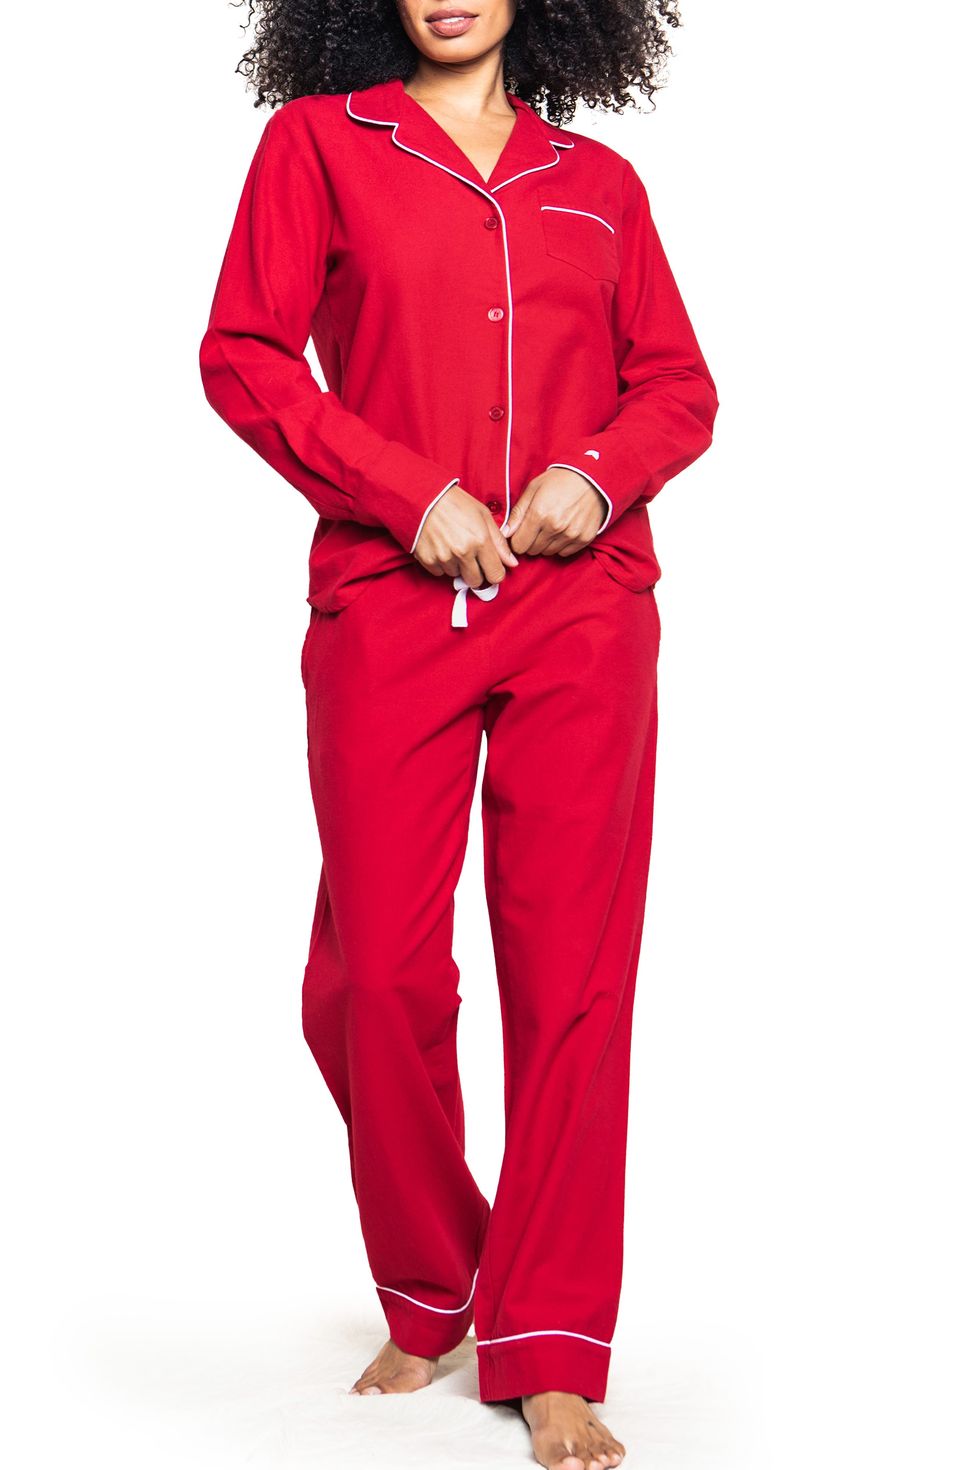 Women's Premium 100% Cotton Flannel Pajama Sleepwear Set (Relaxed